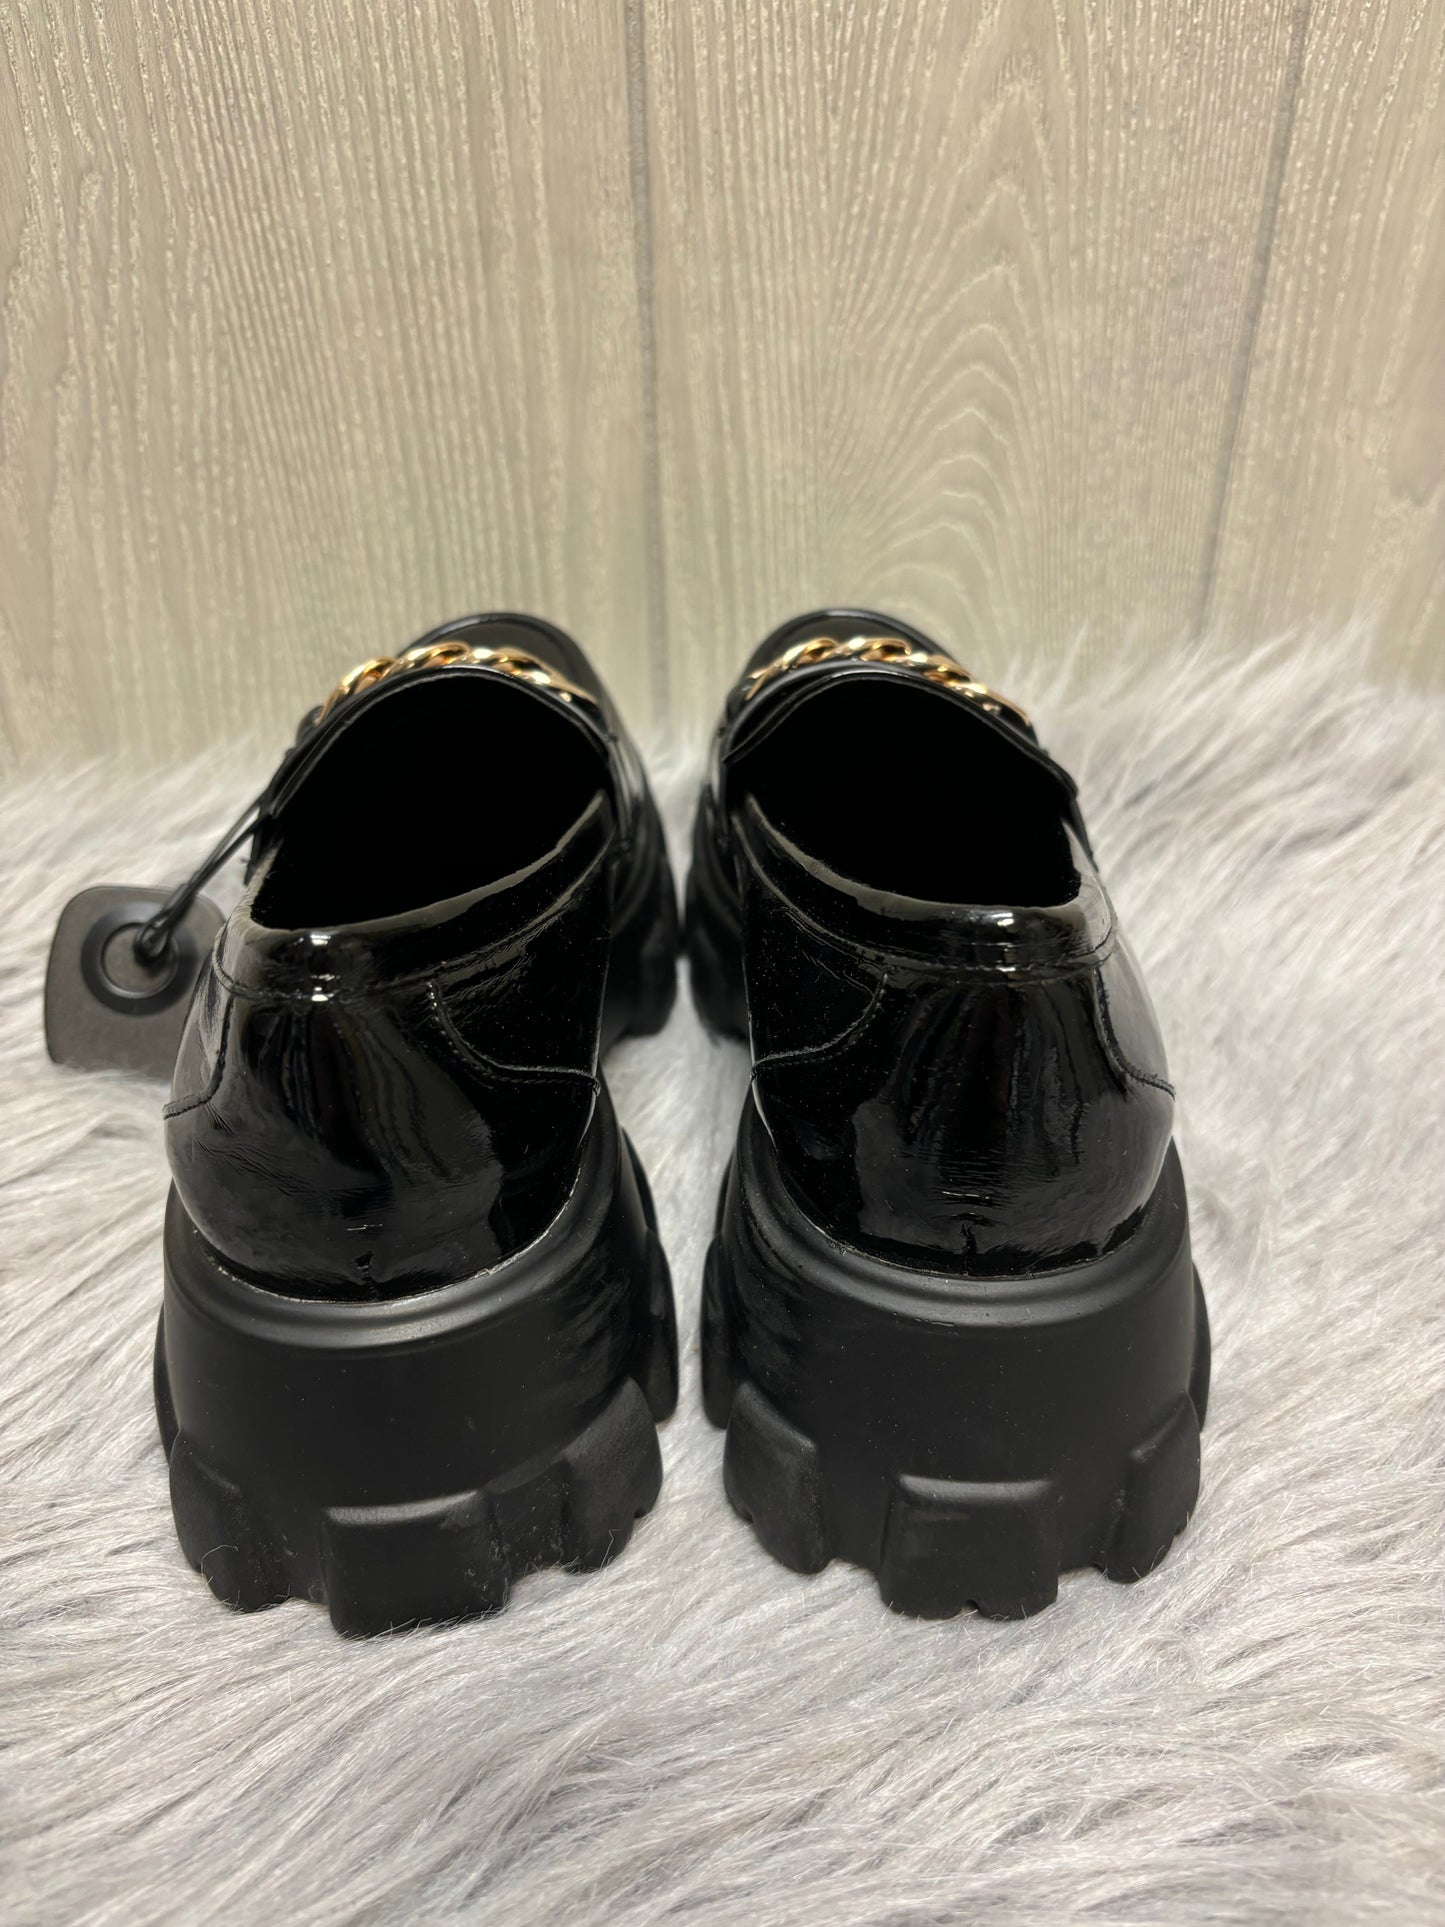 Black & Gold Shoes Heels Platform Bamboo, Size 8